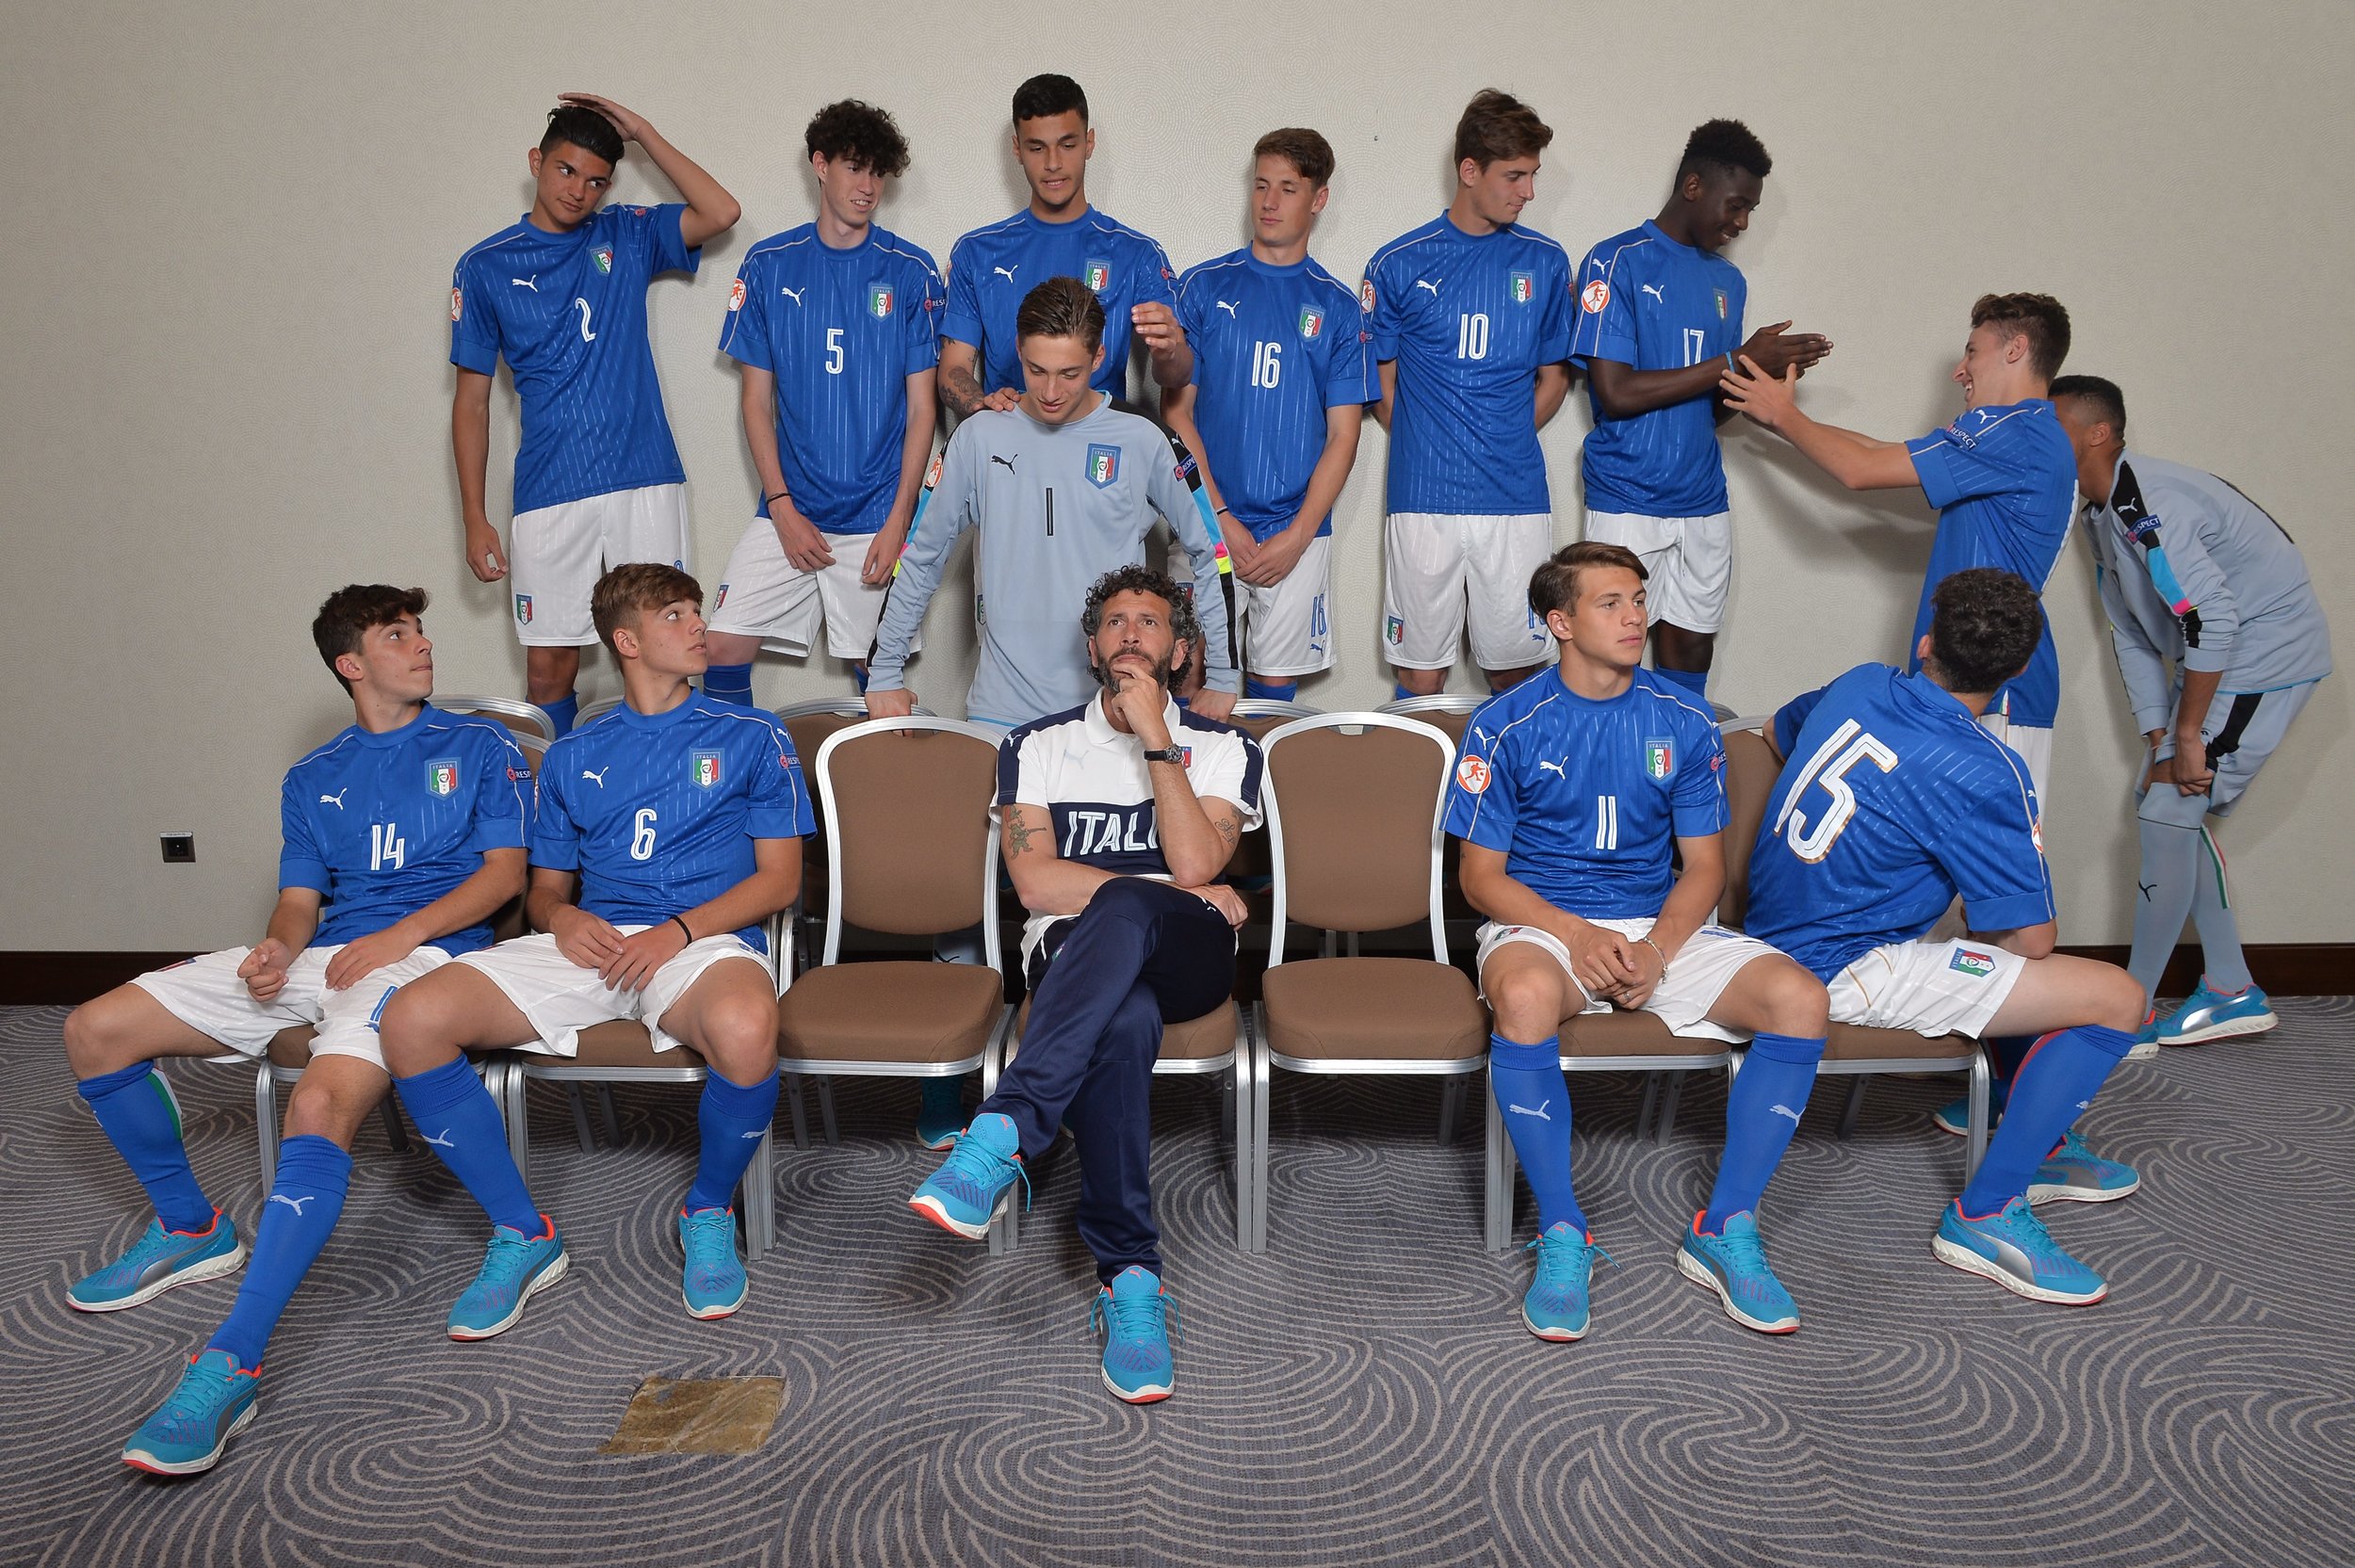  Awaiting the Under-17 Italy Squad Photo in Azerbaijan 2016 /&nbsp; UEFA / Sportsfile  